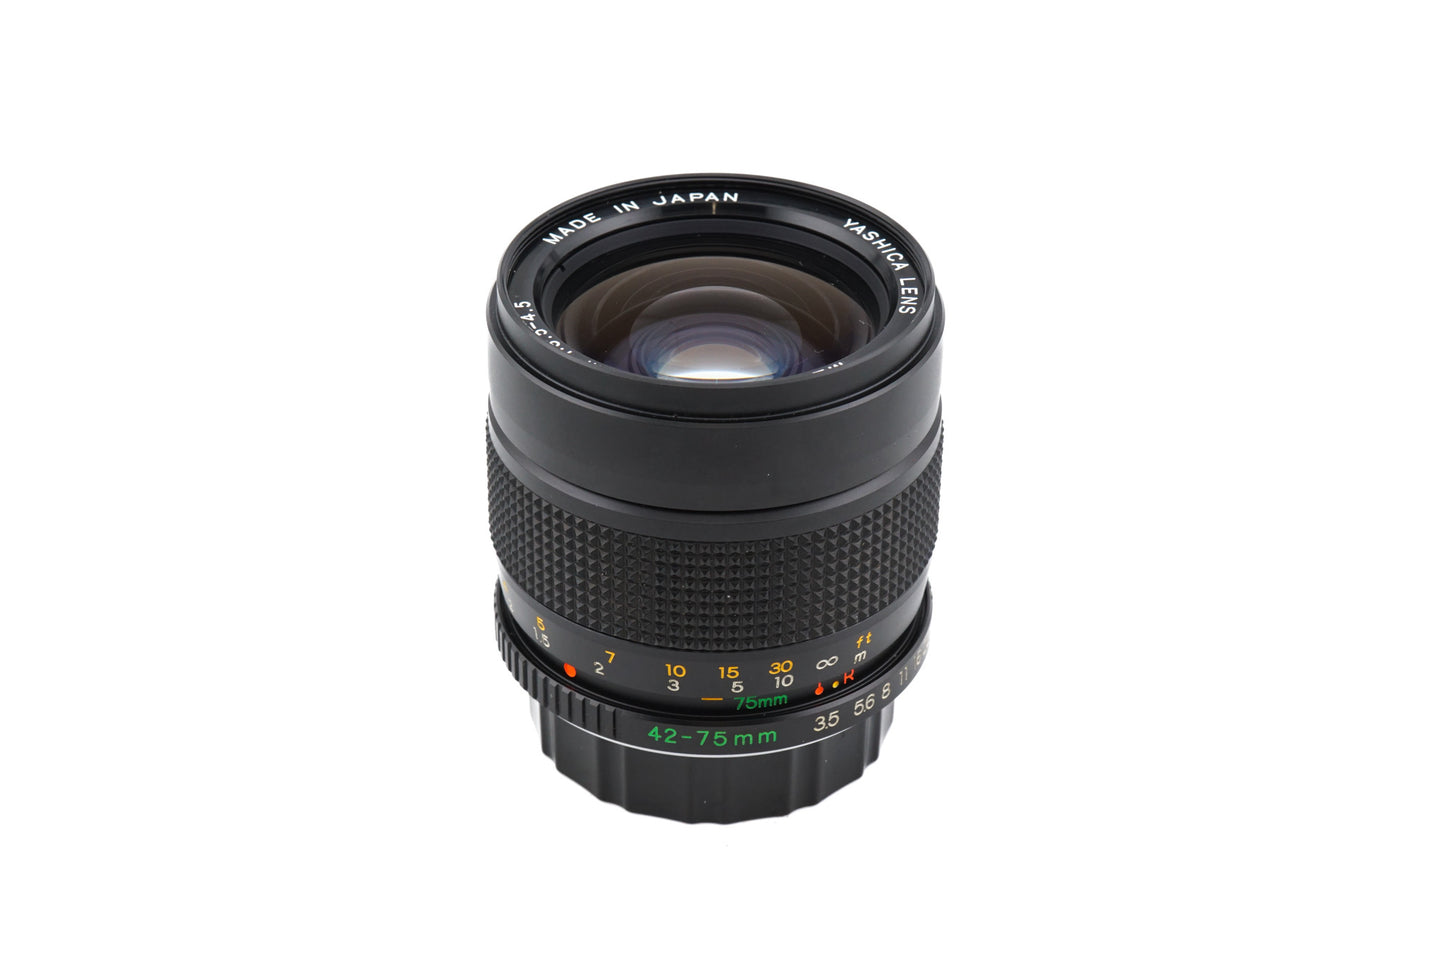 Yashica 42-75mm f3.5-4.5 ML Zoom - Lens